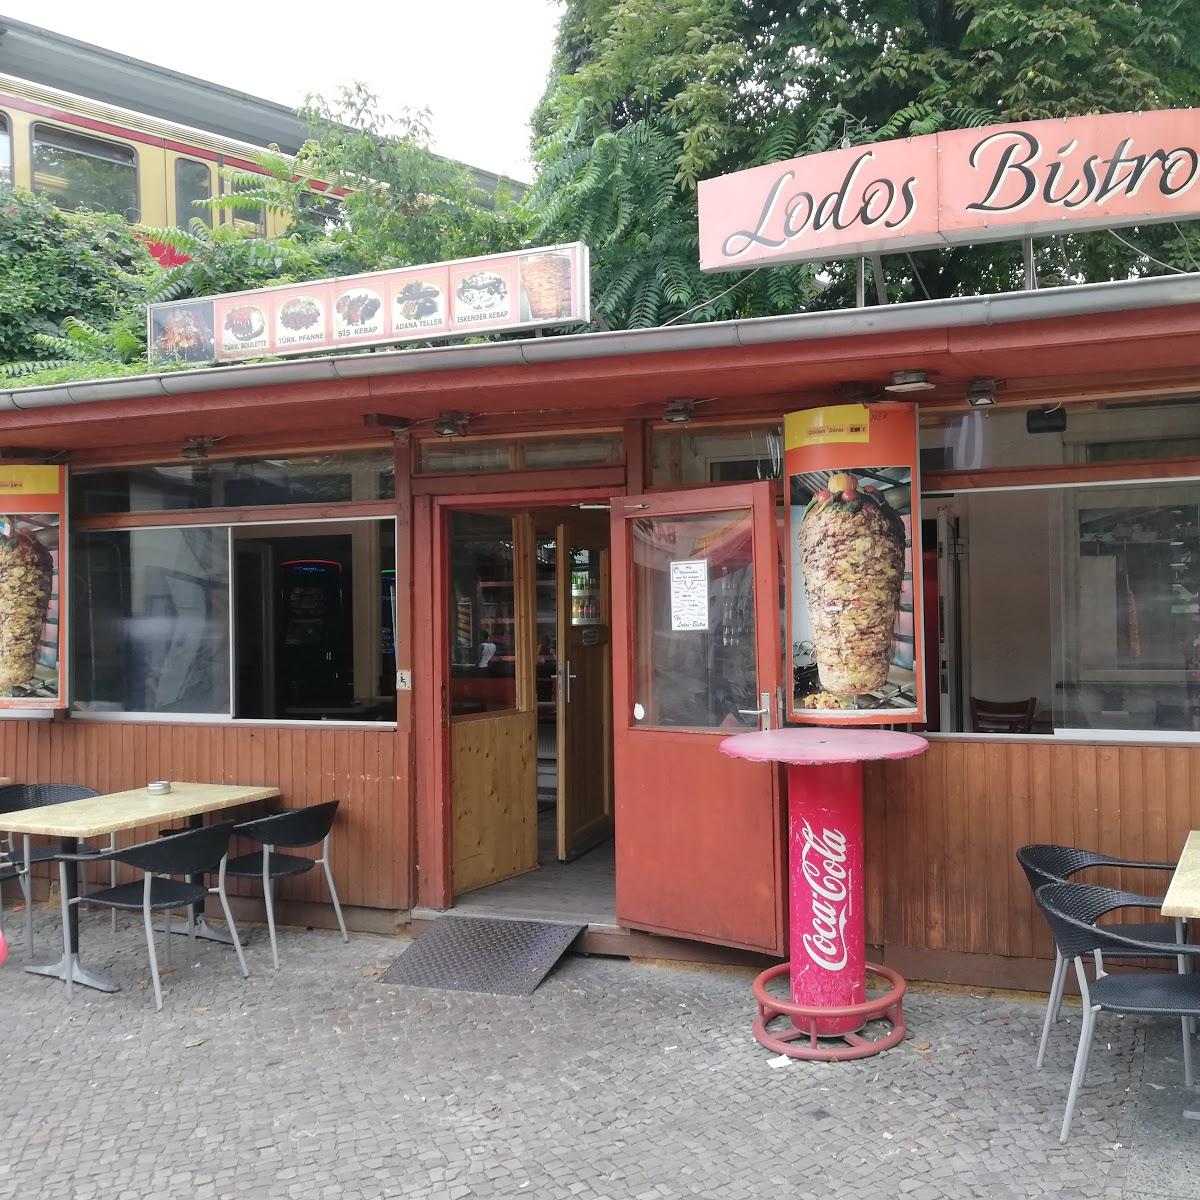 Restaurant "Lodos Bistro" in Berlin